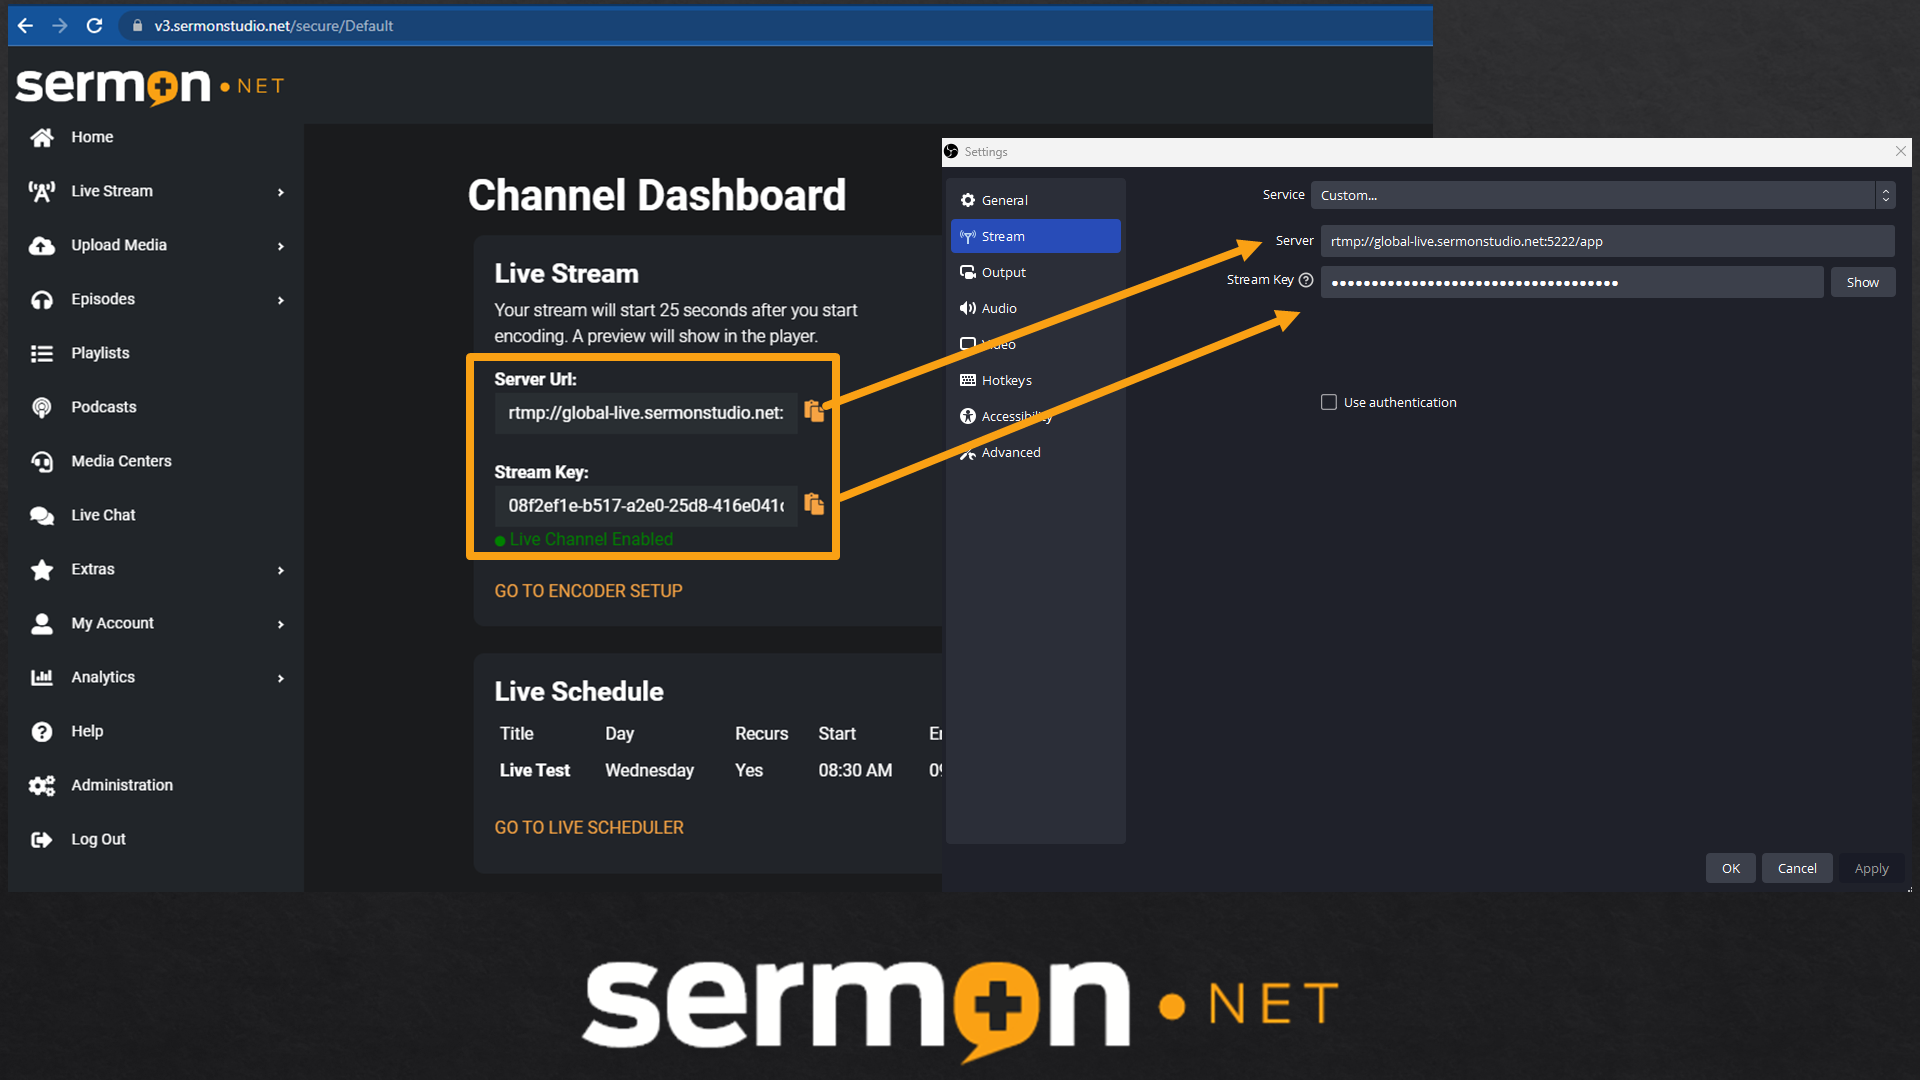 sermon.net live streaming